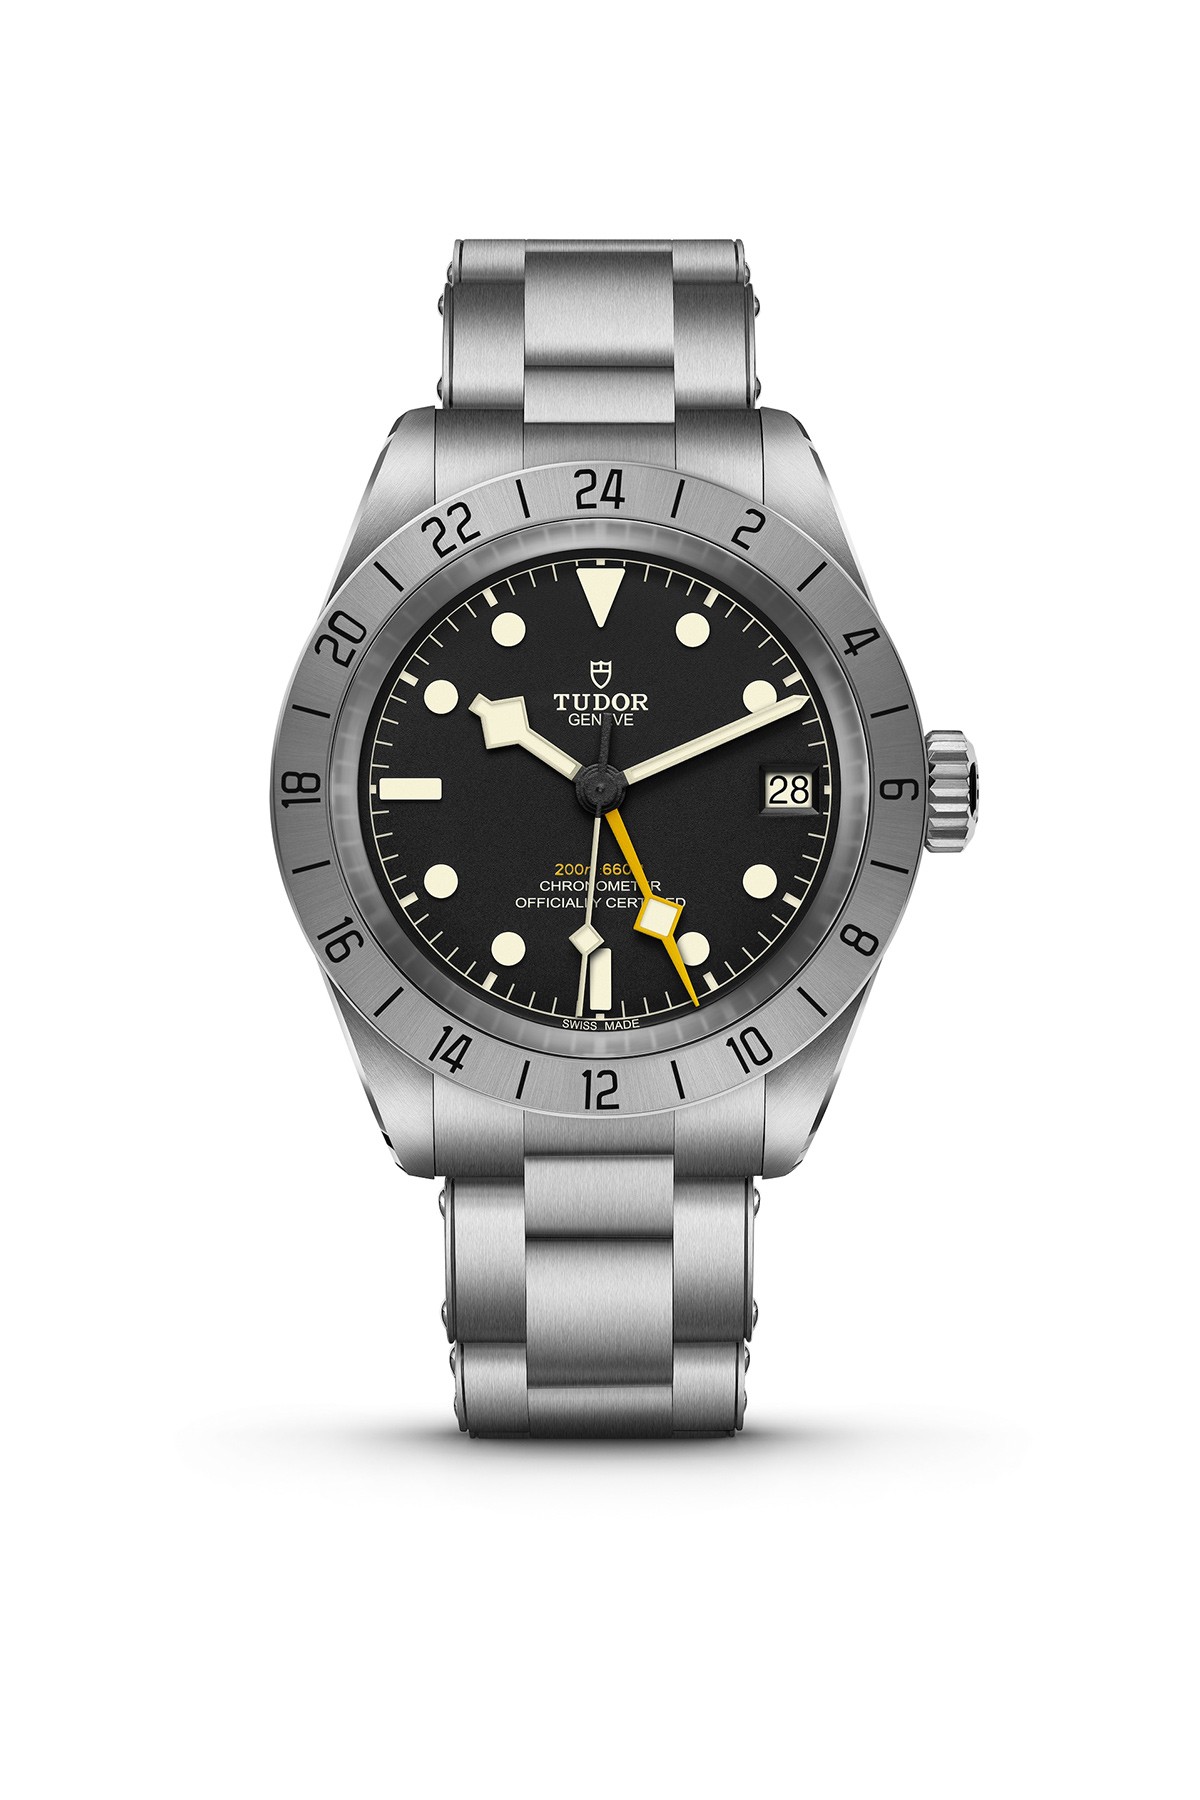 Tudor 2022 年全新錶款阵容正式登场